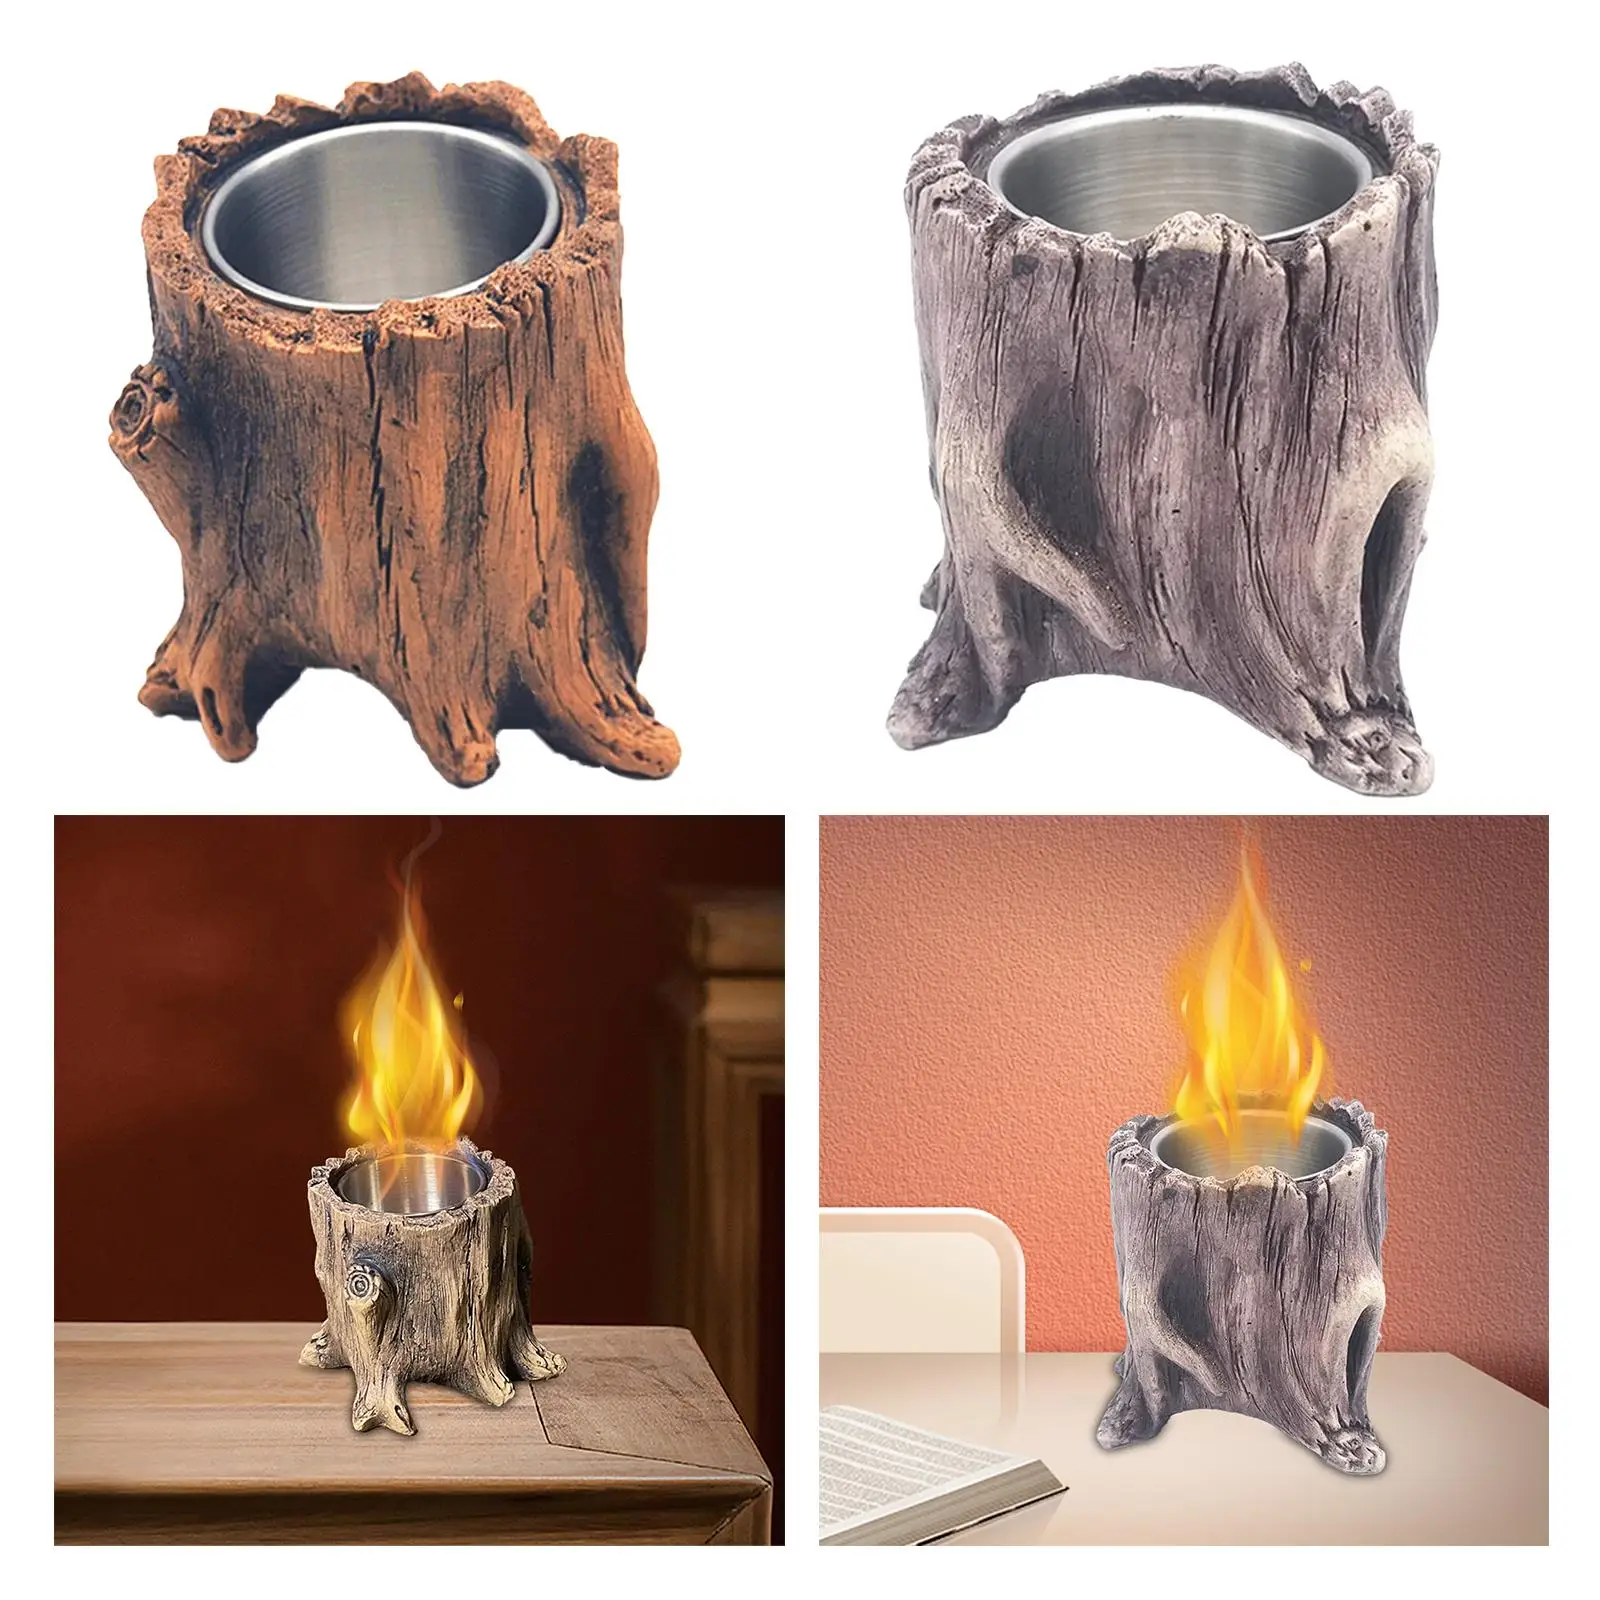 Tabletop Fireplace Fire Concrete Bowl Pot Tree Stump Desktop Burner Conch Fire Bowls Alcohol Fireplace for Camping Centerpiece